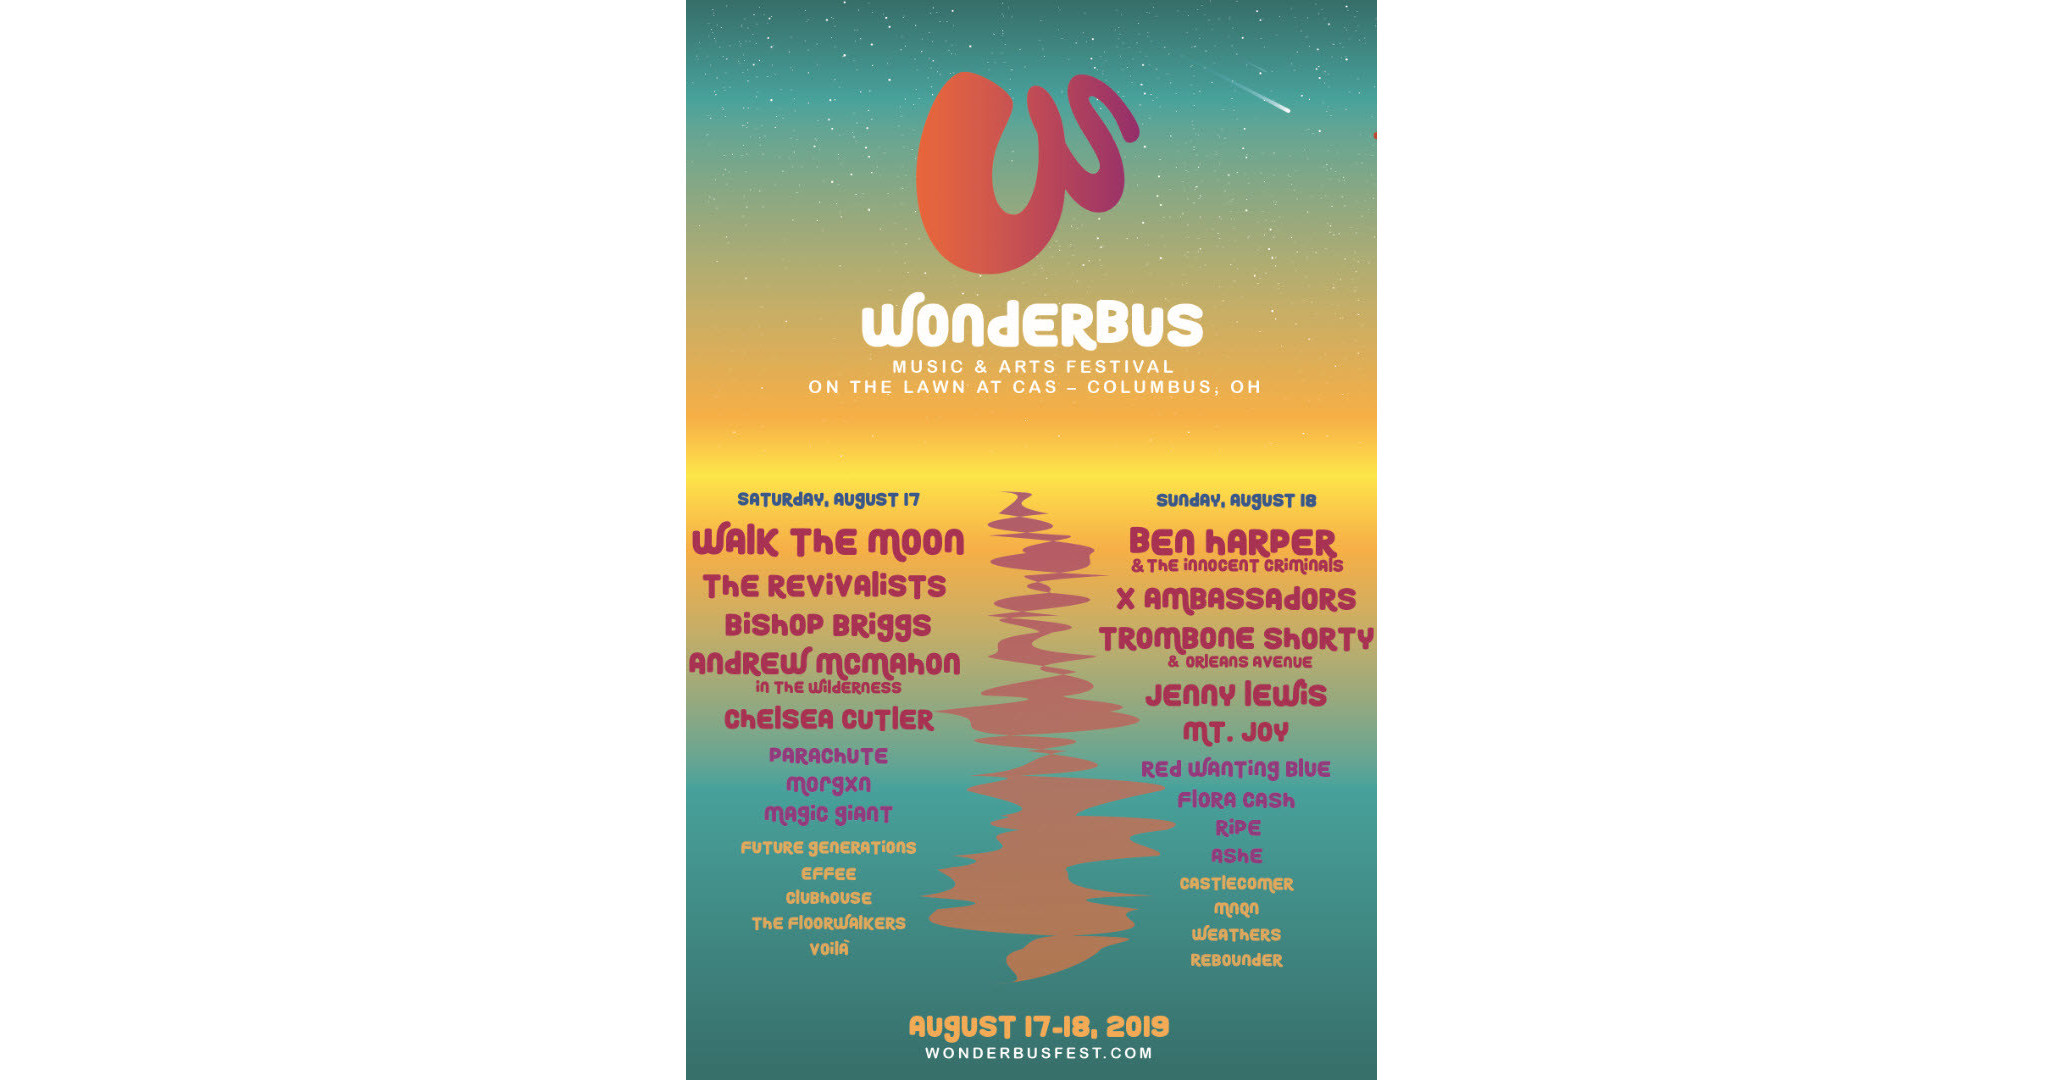 WonderBus Has Arrived